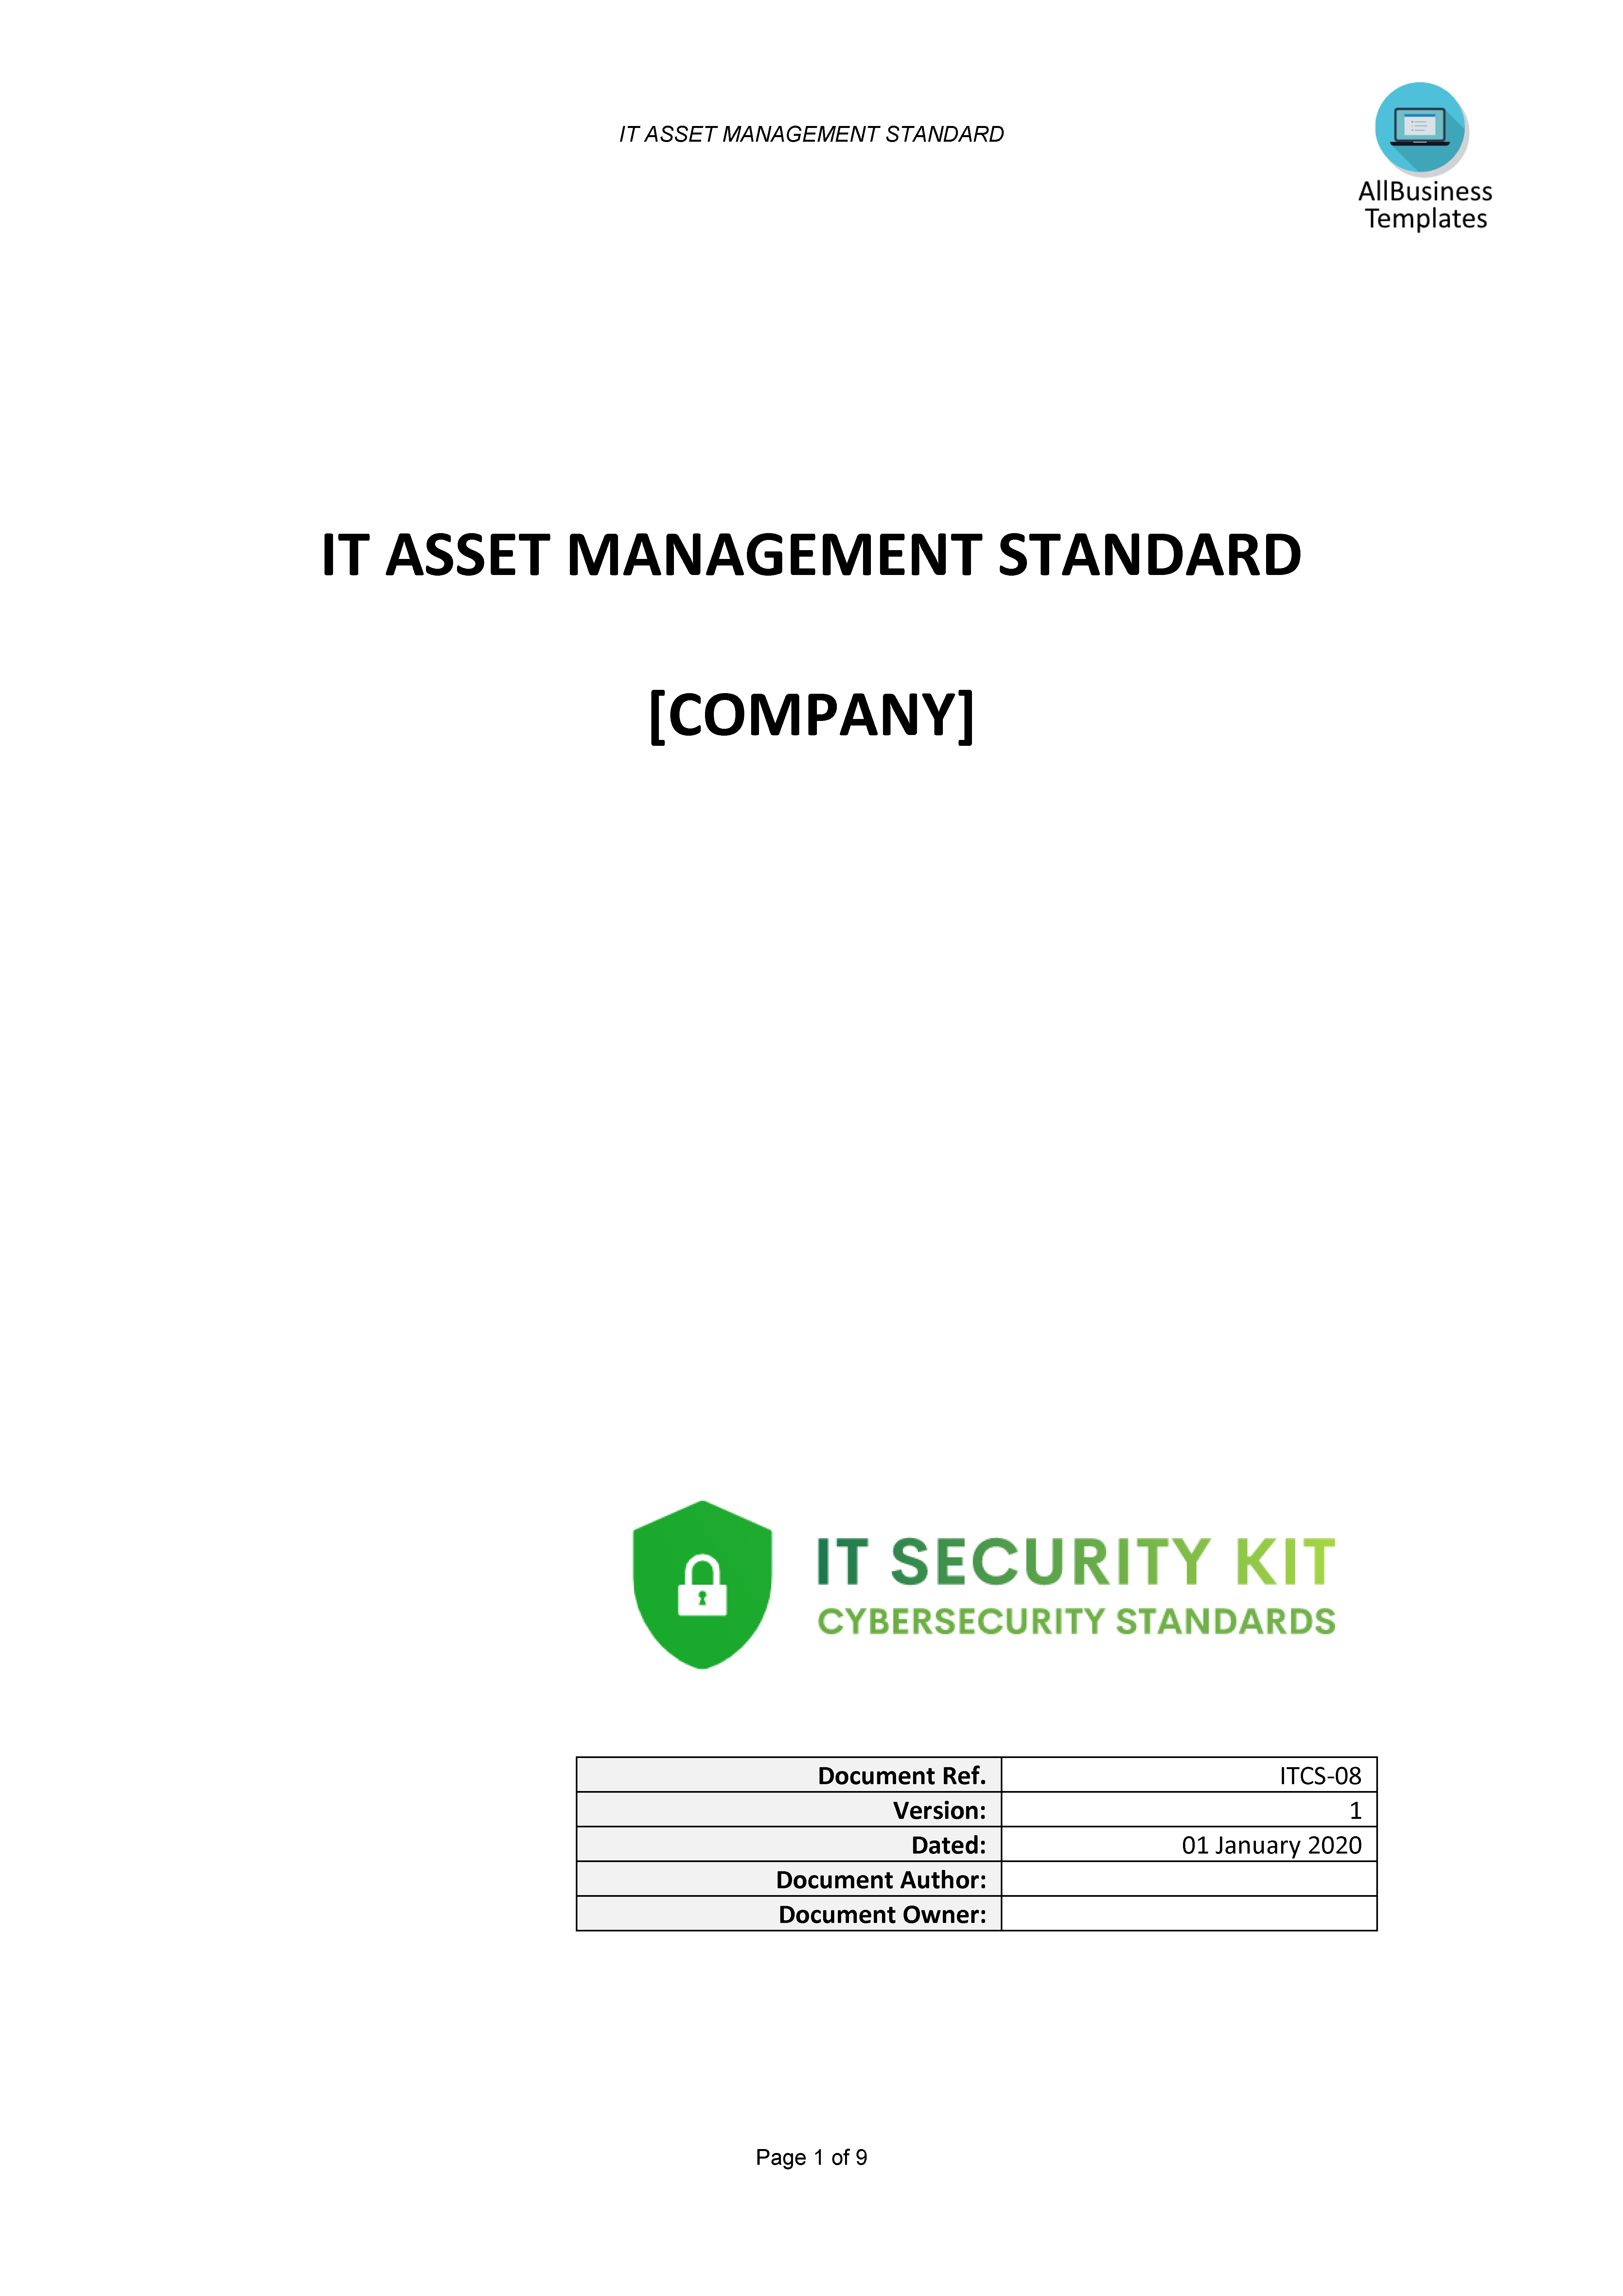 IT Asset Management Cybersecurity Standard main image